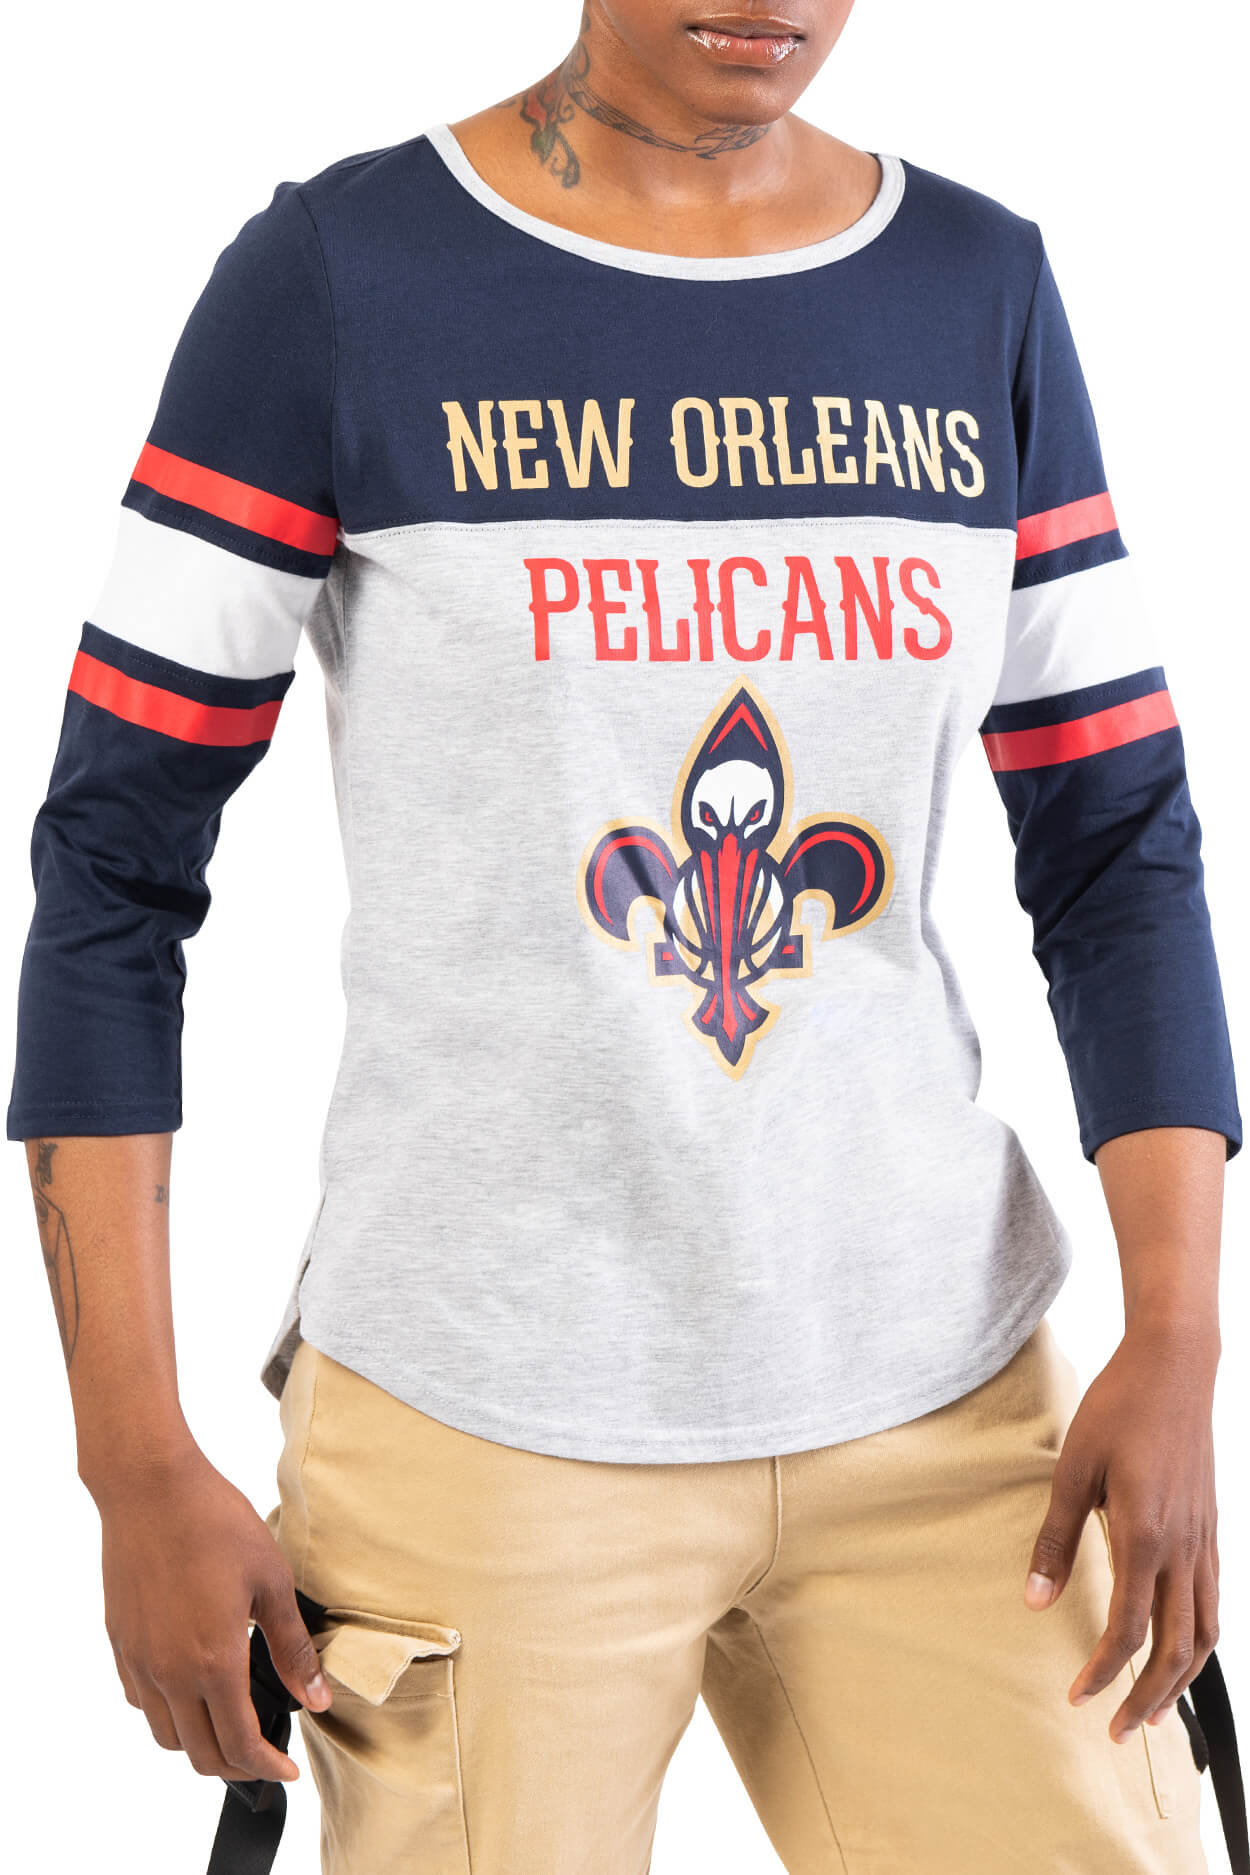 NBA New Orleans Pelicans Women's Baseball Tee|New Orleans Pelicans